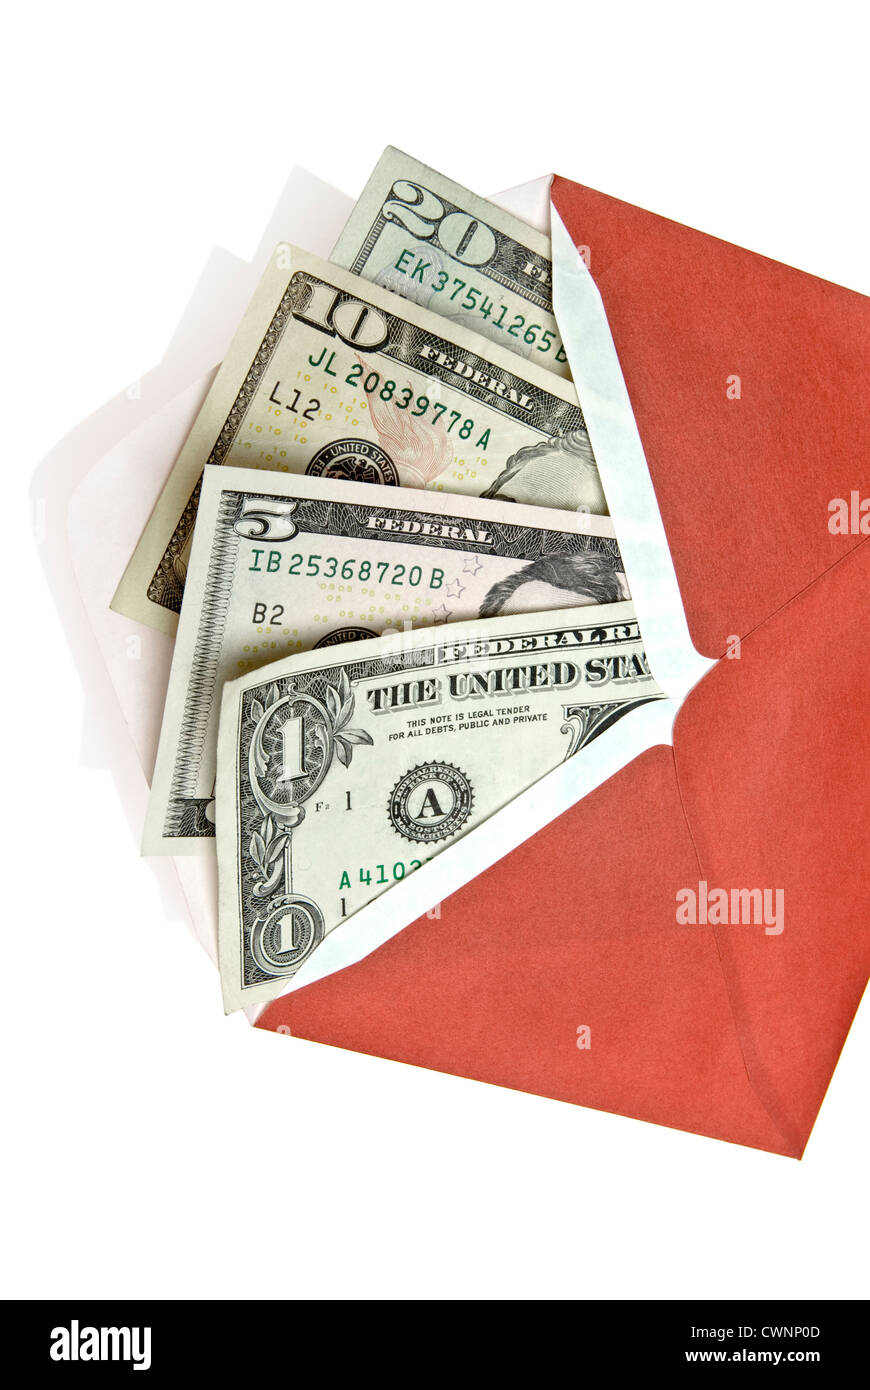 Envelope with US-dollar bills, isolated on 100% white background Stock Photo